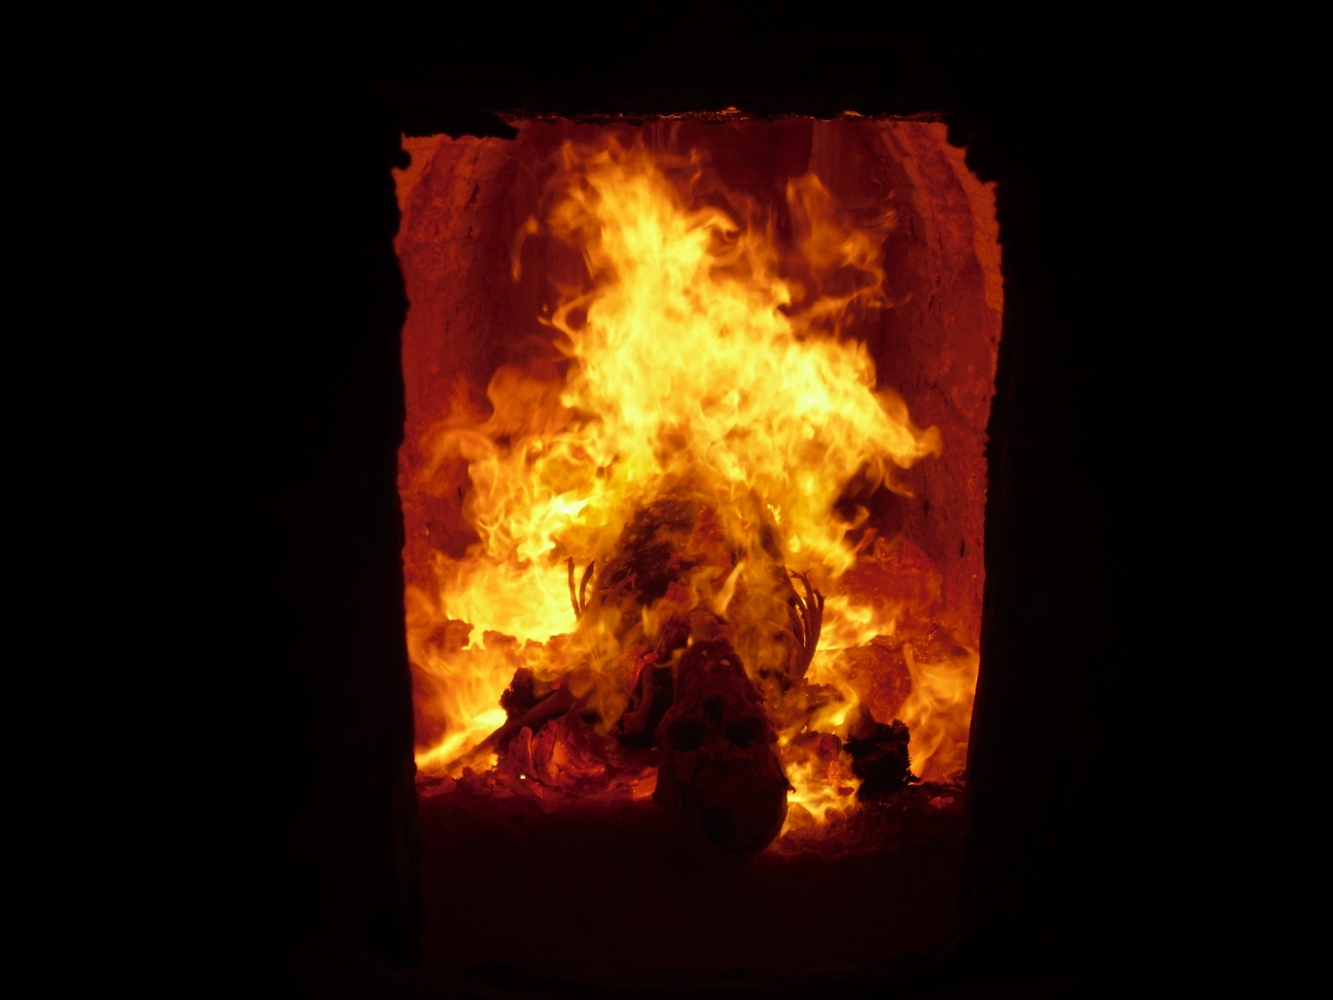 burning body in a crematory (crematory Meißen, Germany/Saxony)